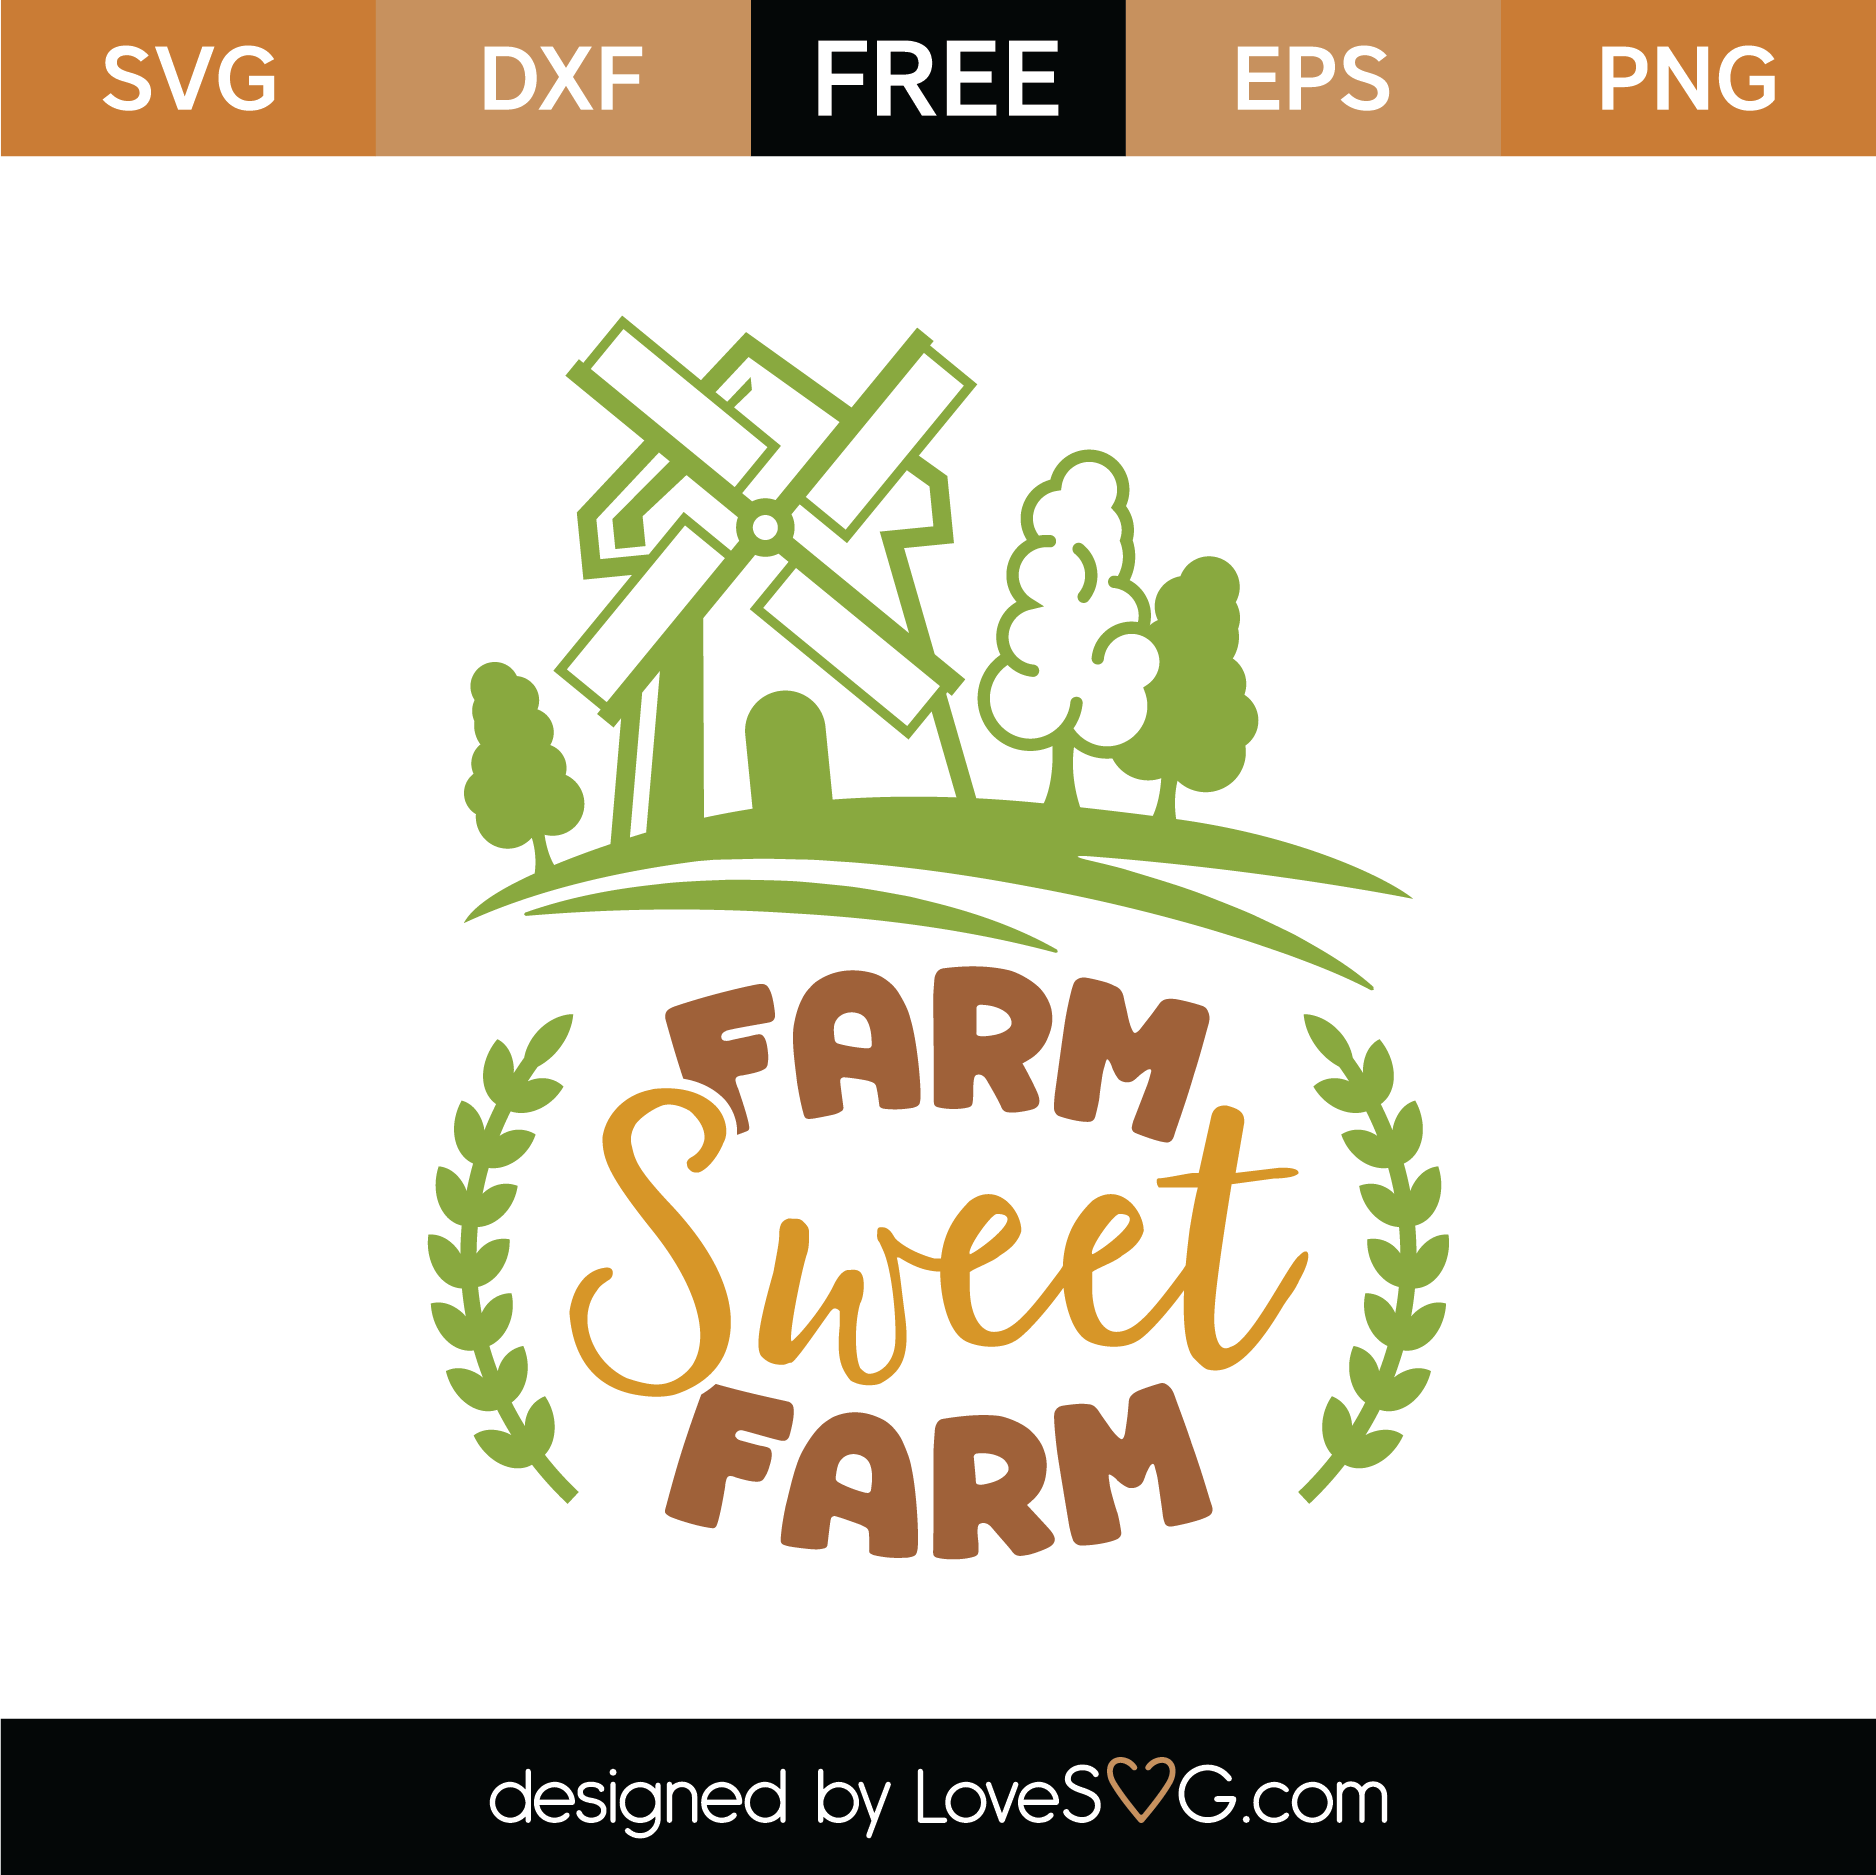 Download Free Farm Sweet Farm SVG Cut File | Lovesvg.com